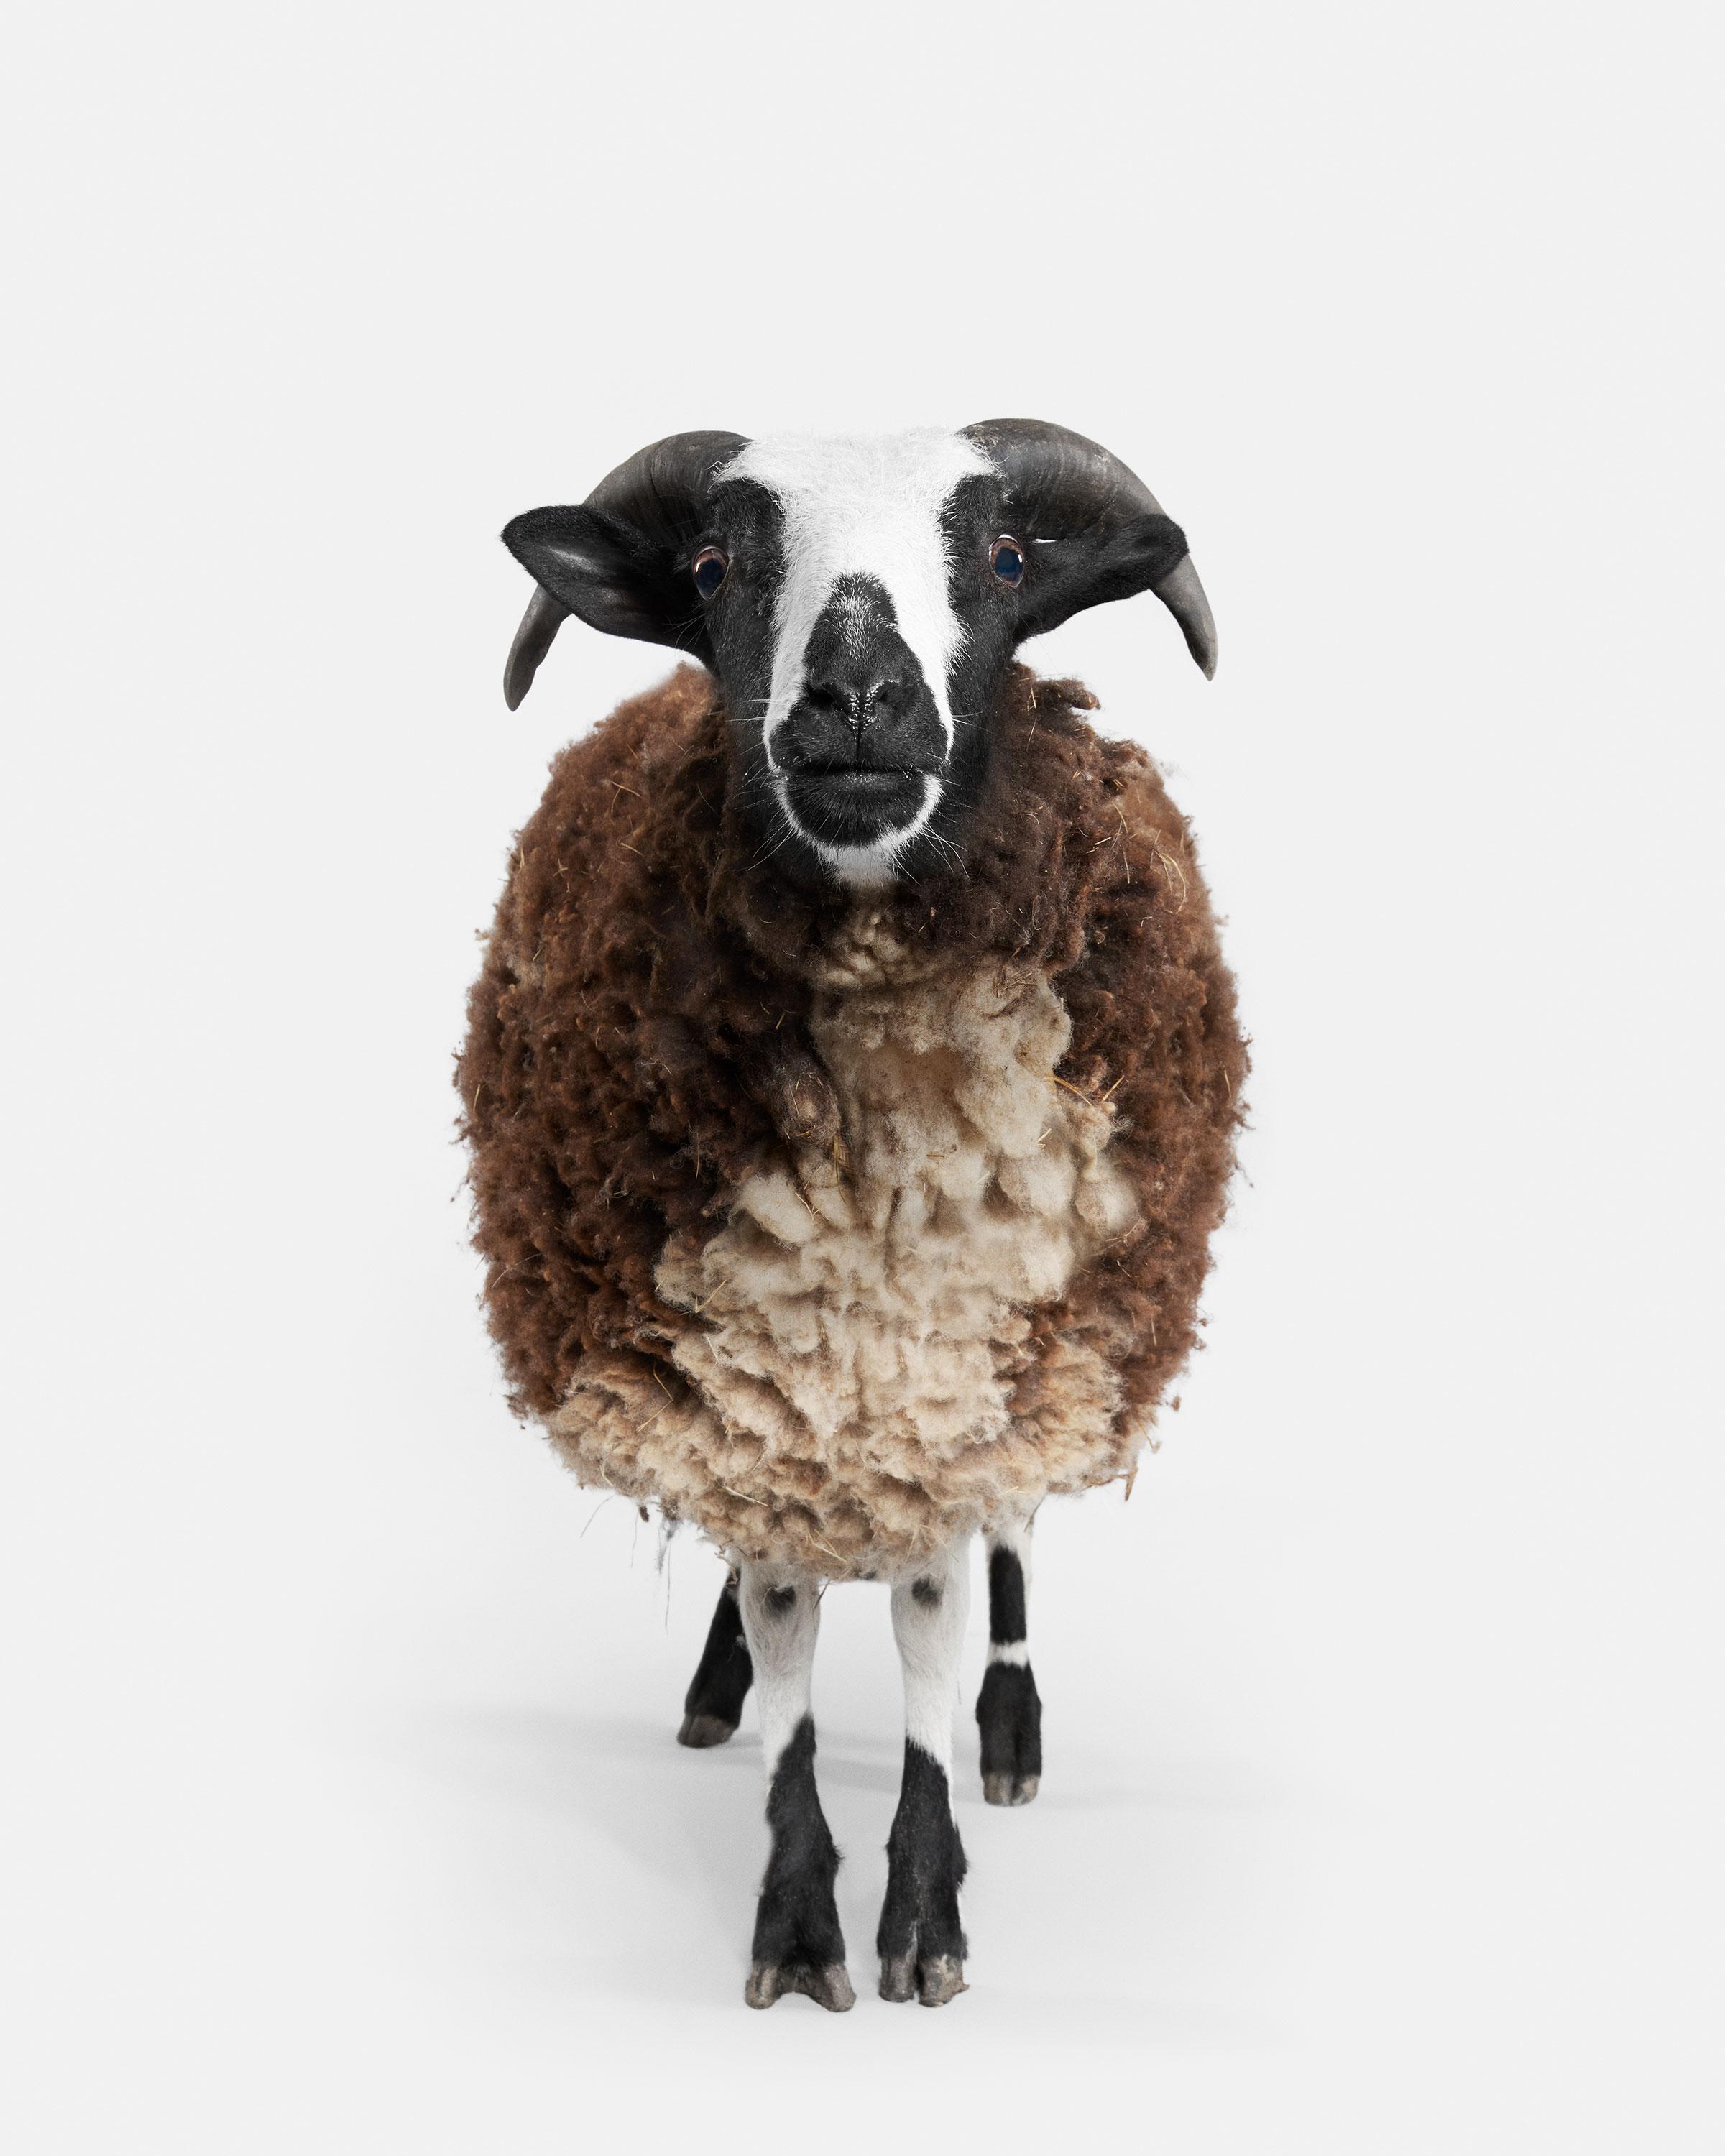 Randal Ford - Jacob Sheep No. 2, Photography 2018